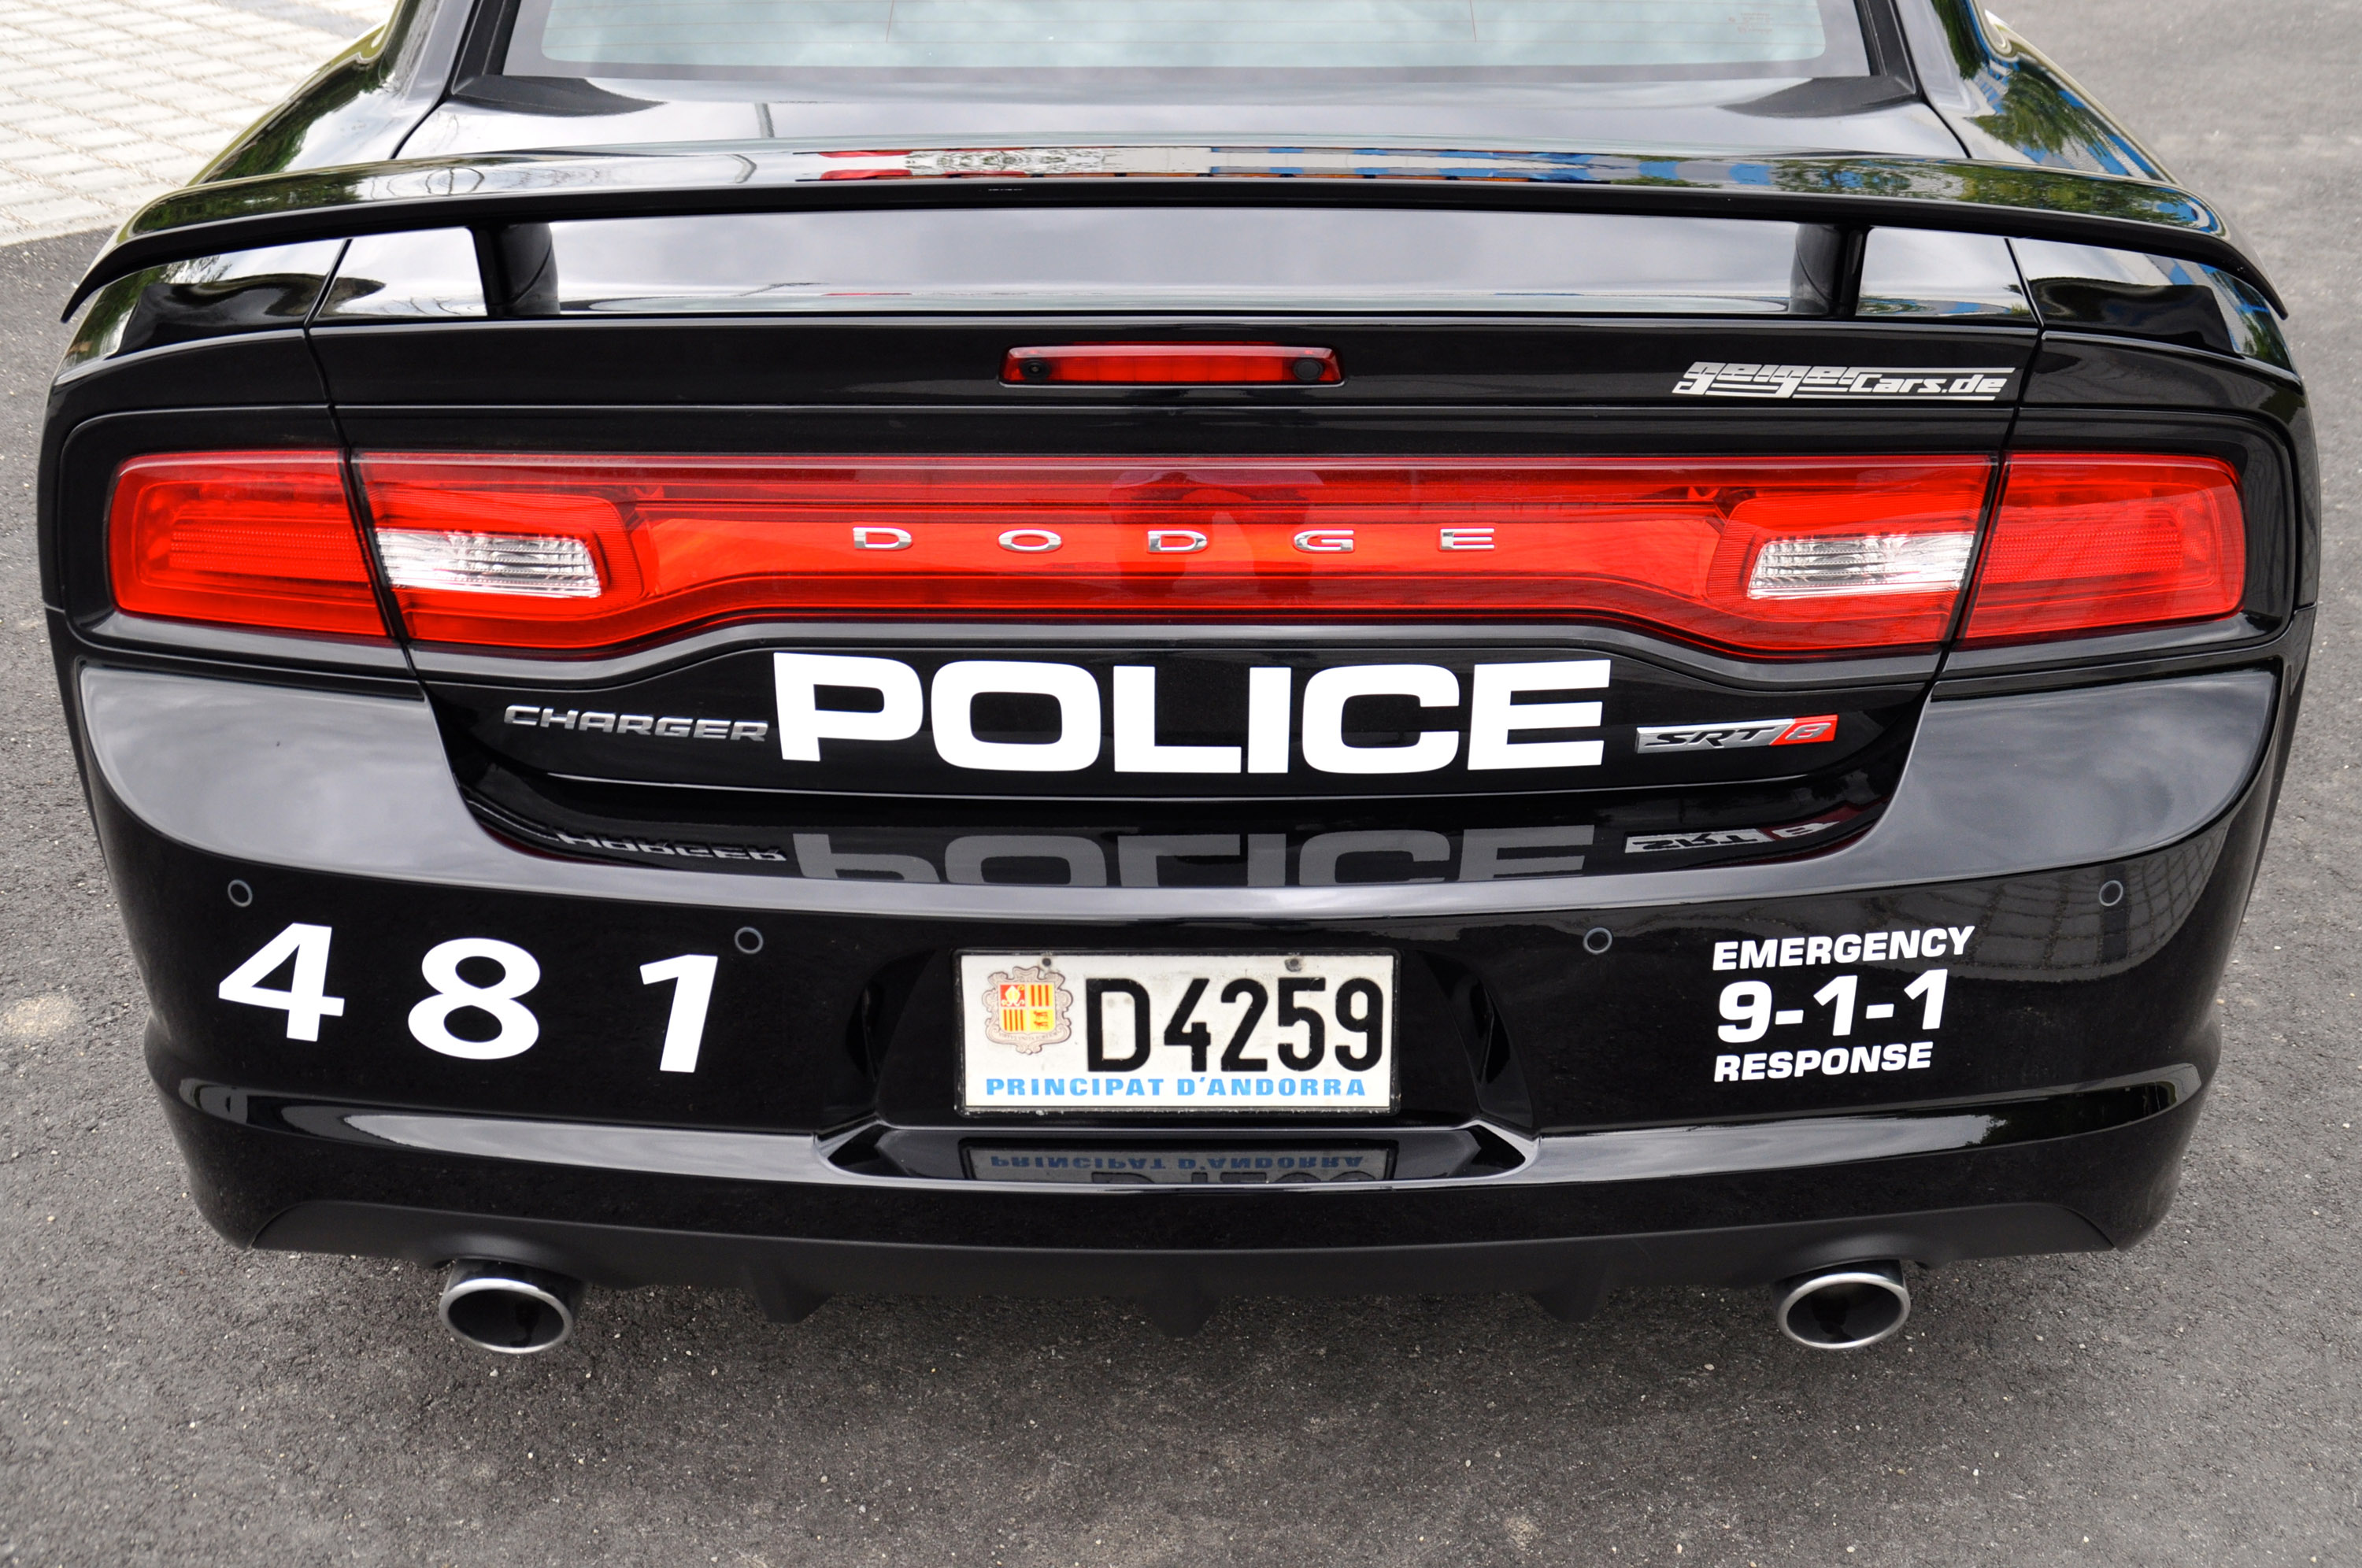 Geigercars Police Dodge Charger SRT8